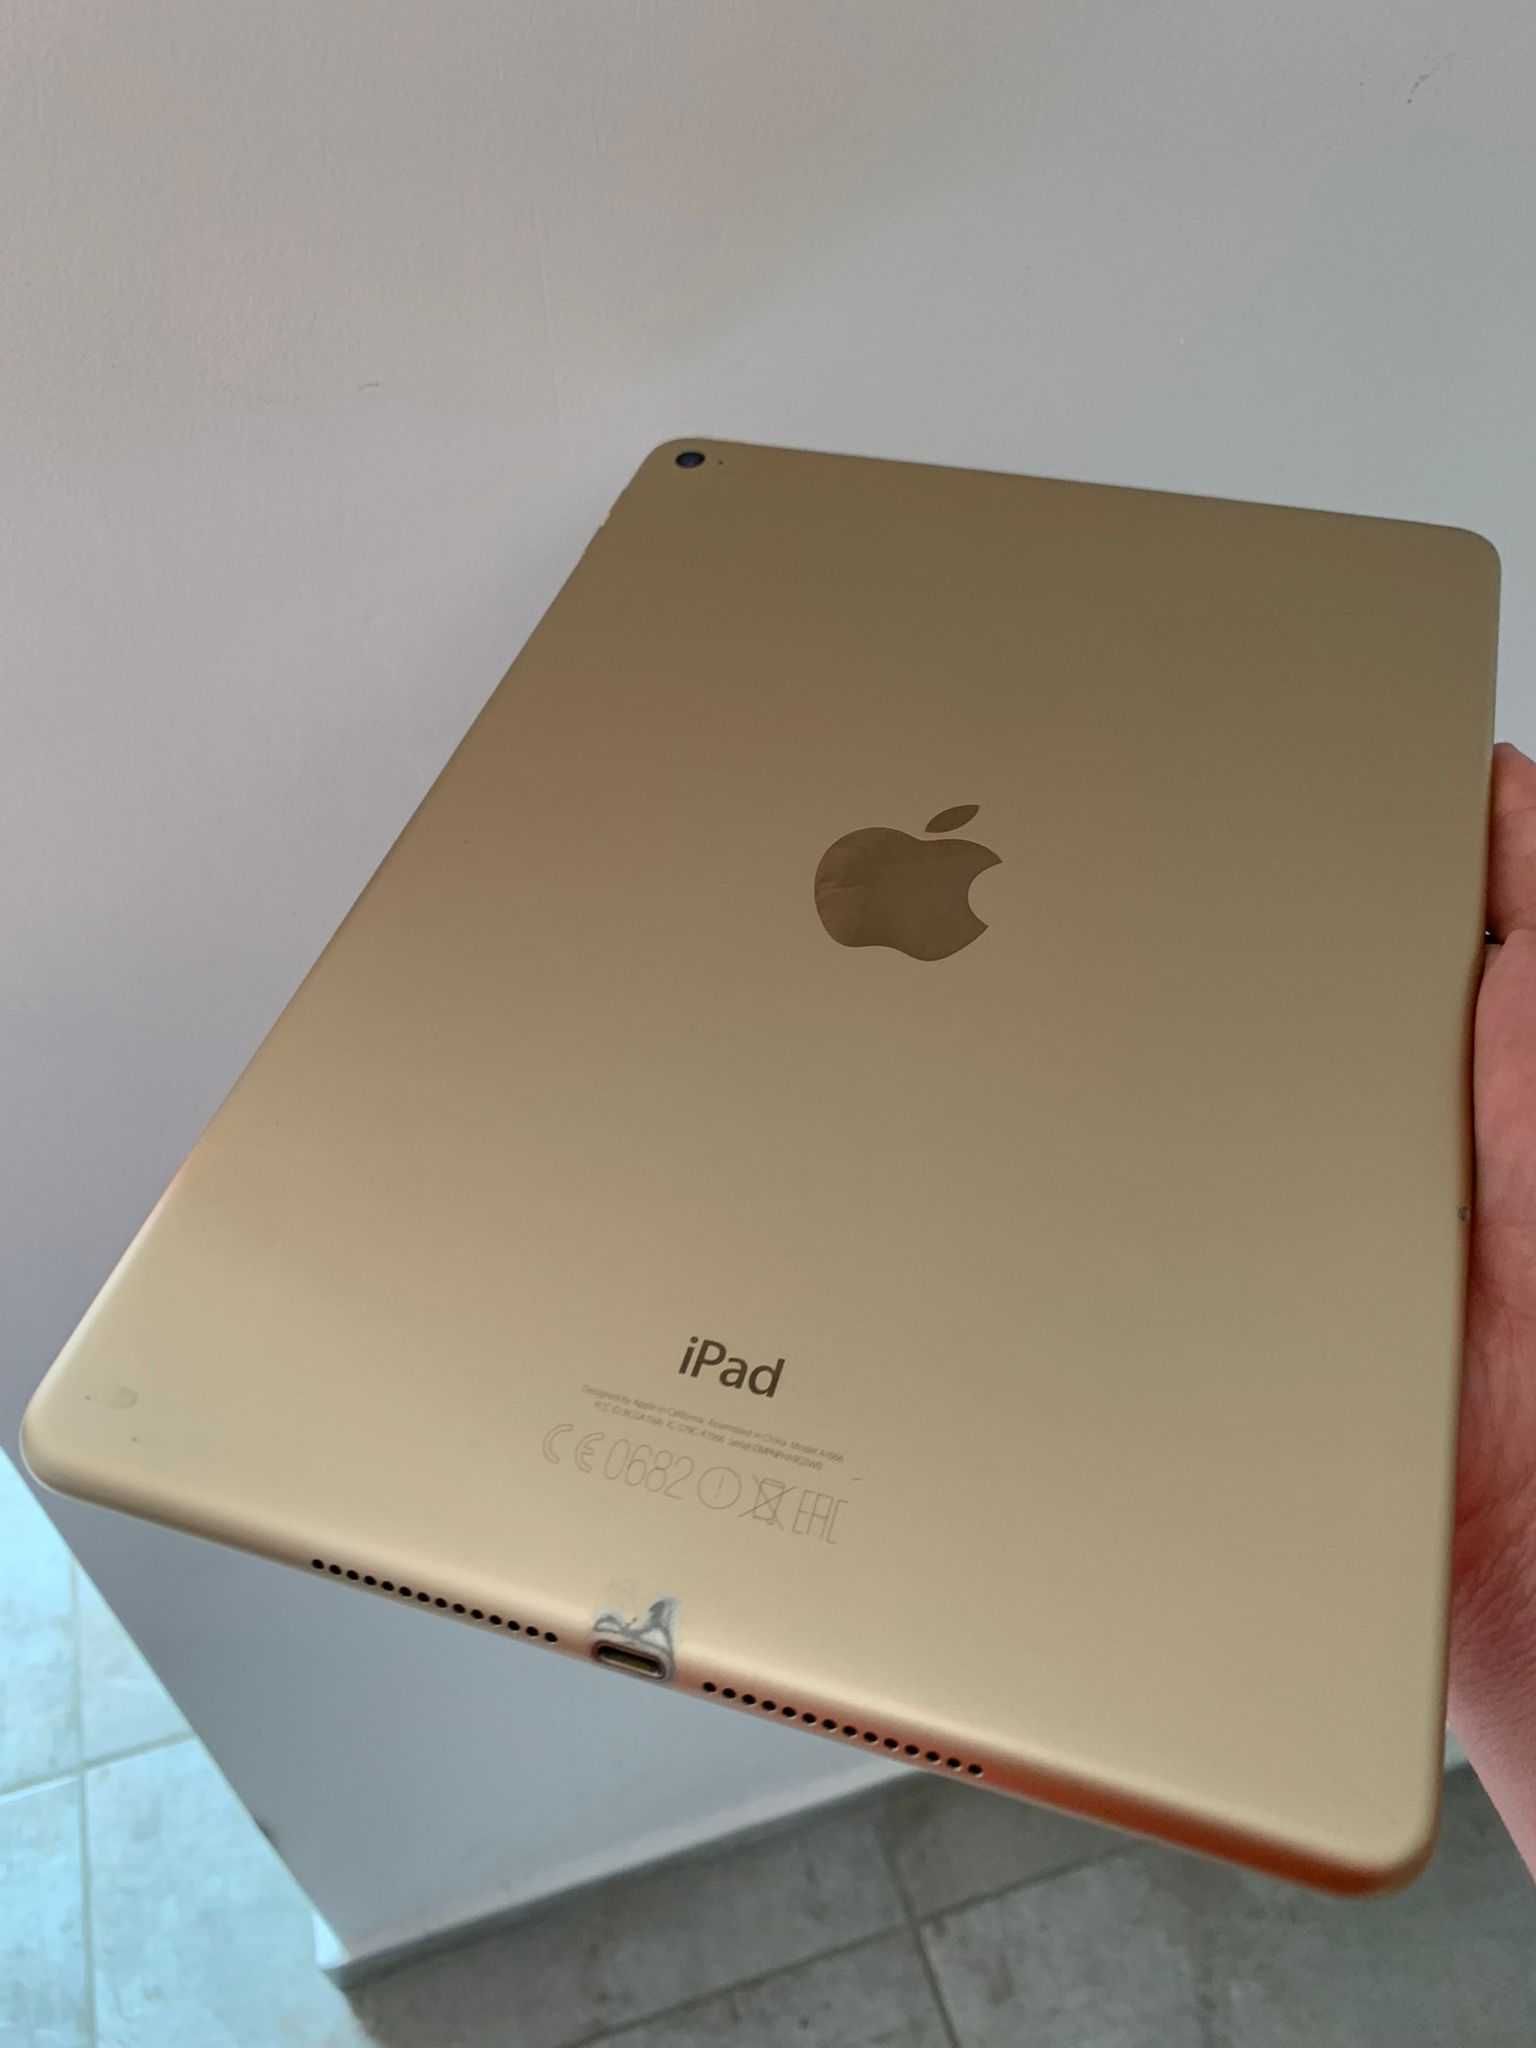 iPad Air 2 64GB Gold